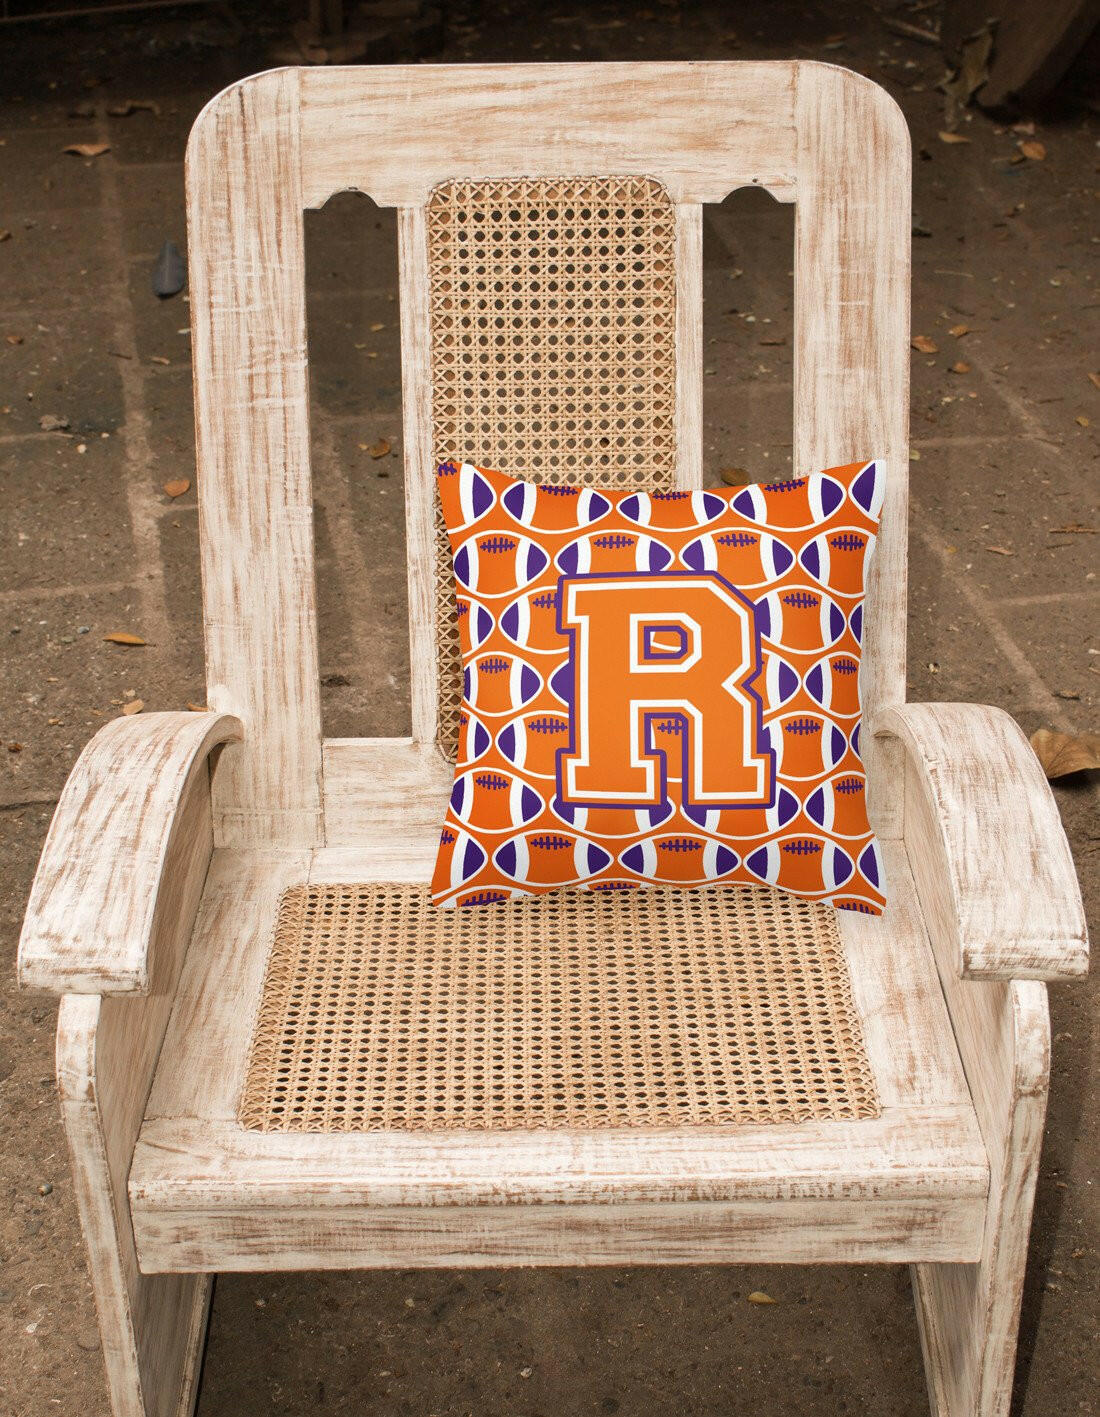 Letter R Football Orange, White and Regalia Fabric Decorative Pillow CJ1072-RPW1414 by Caroline's Treasures